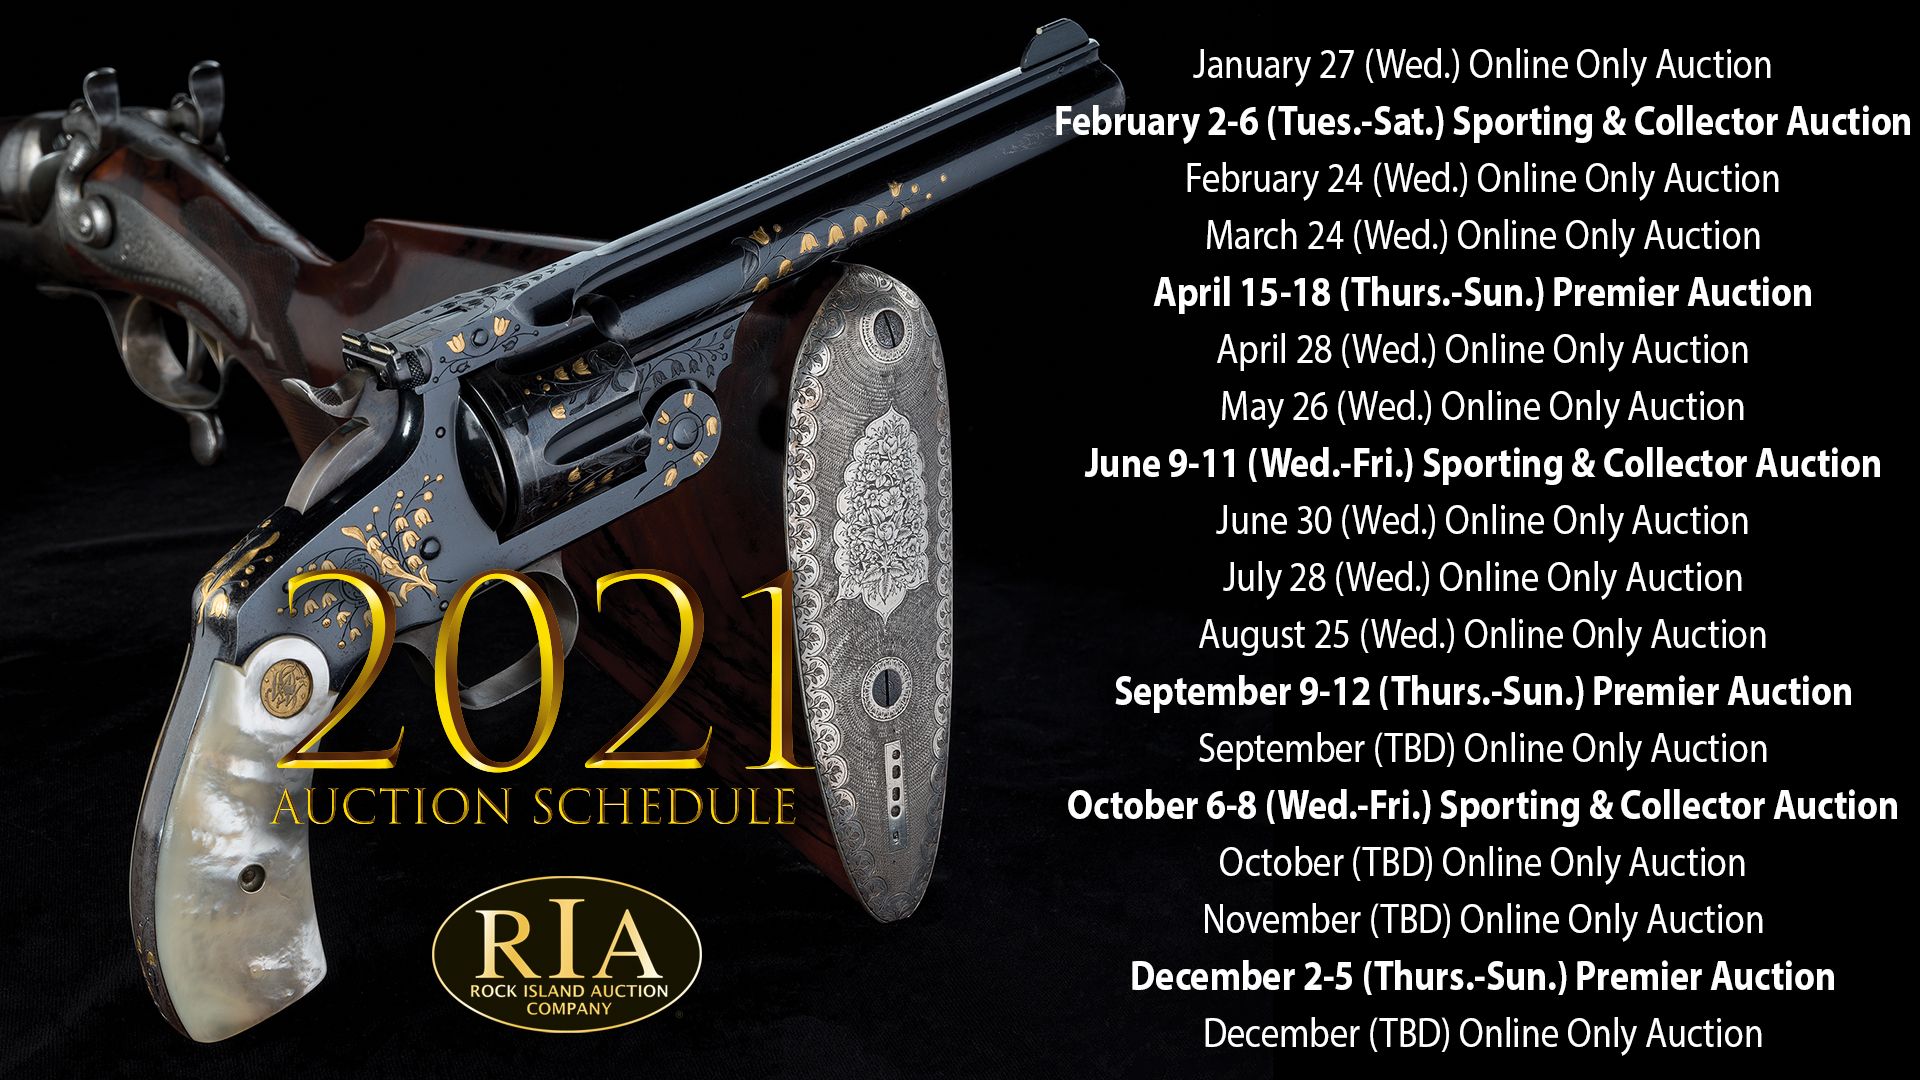 1080-1920-Auction-Schedule2